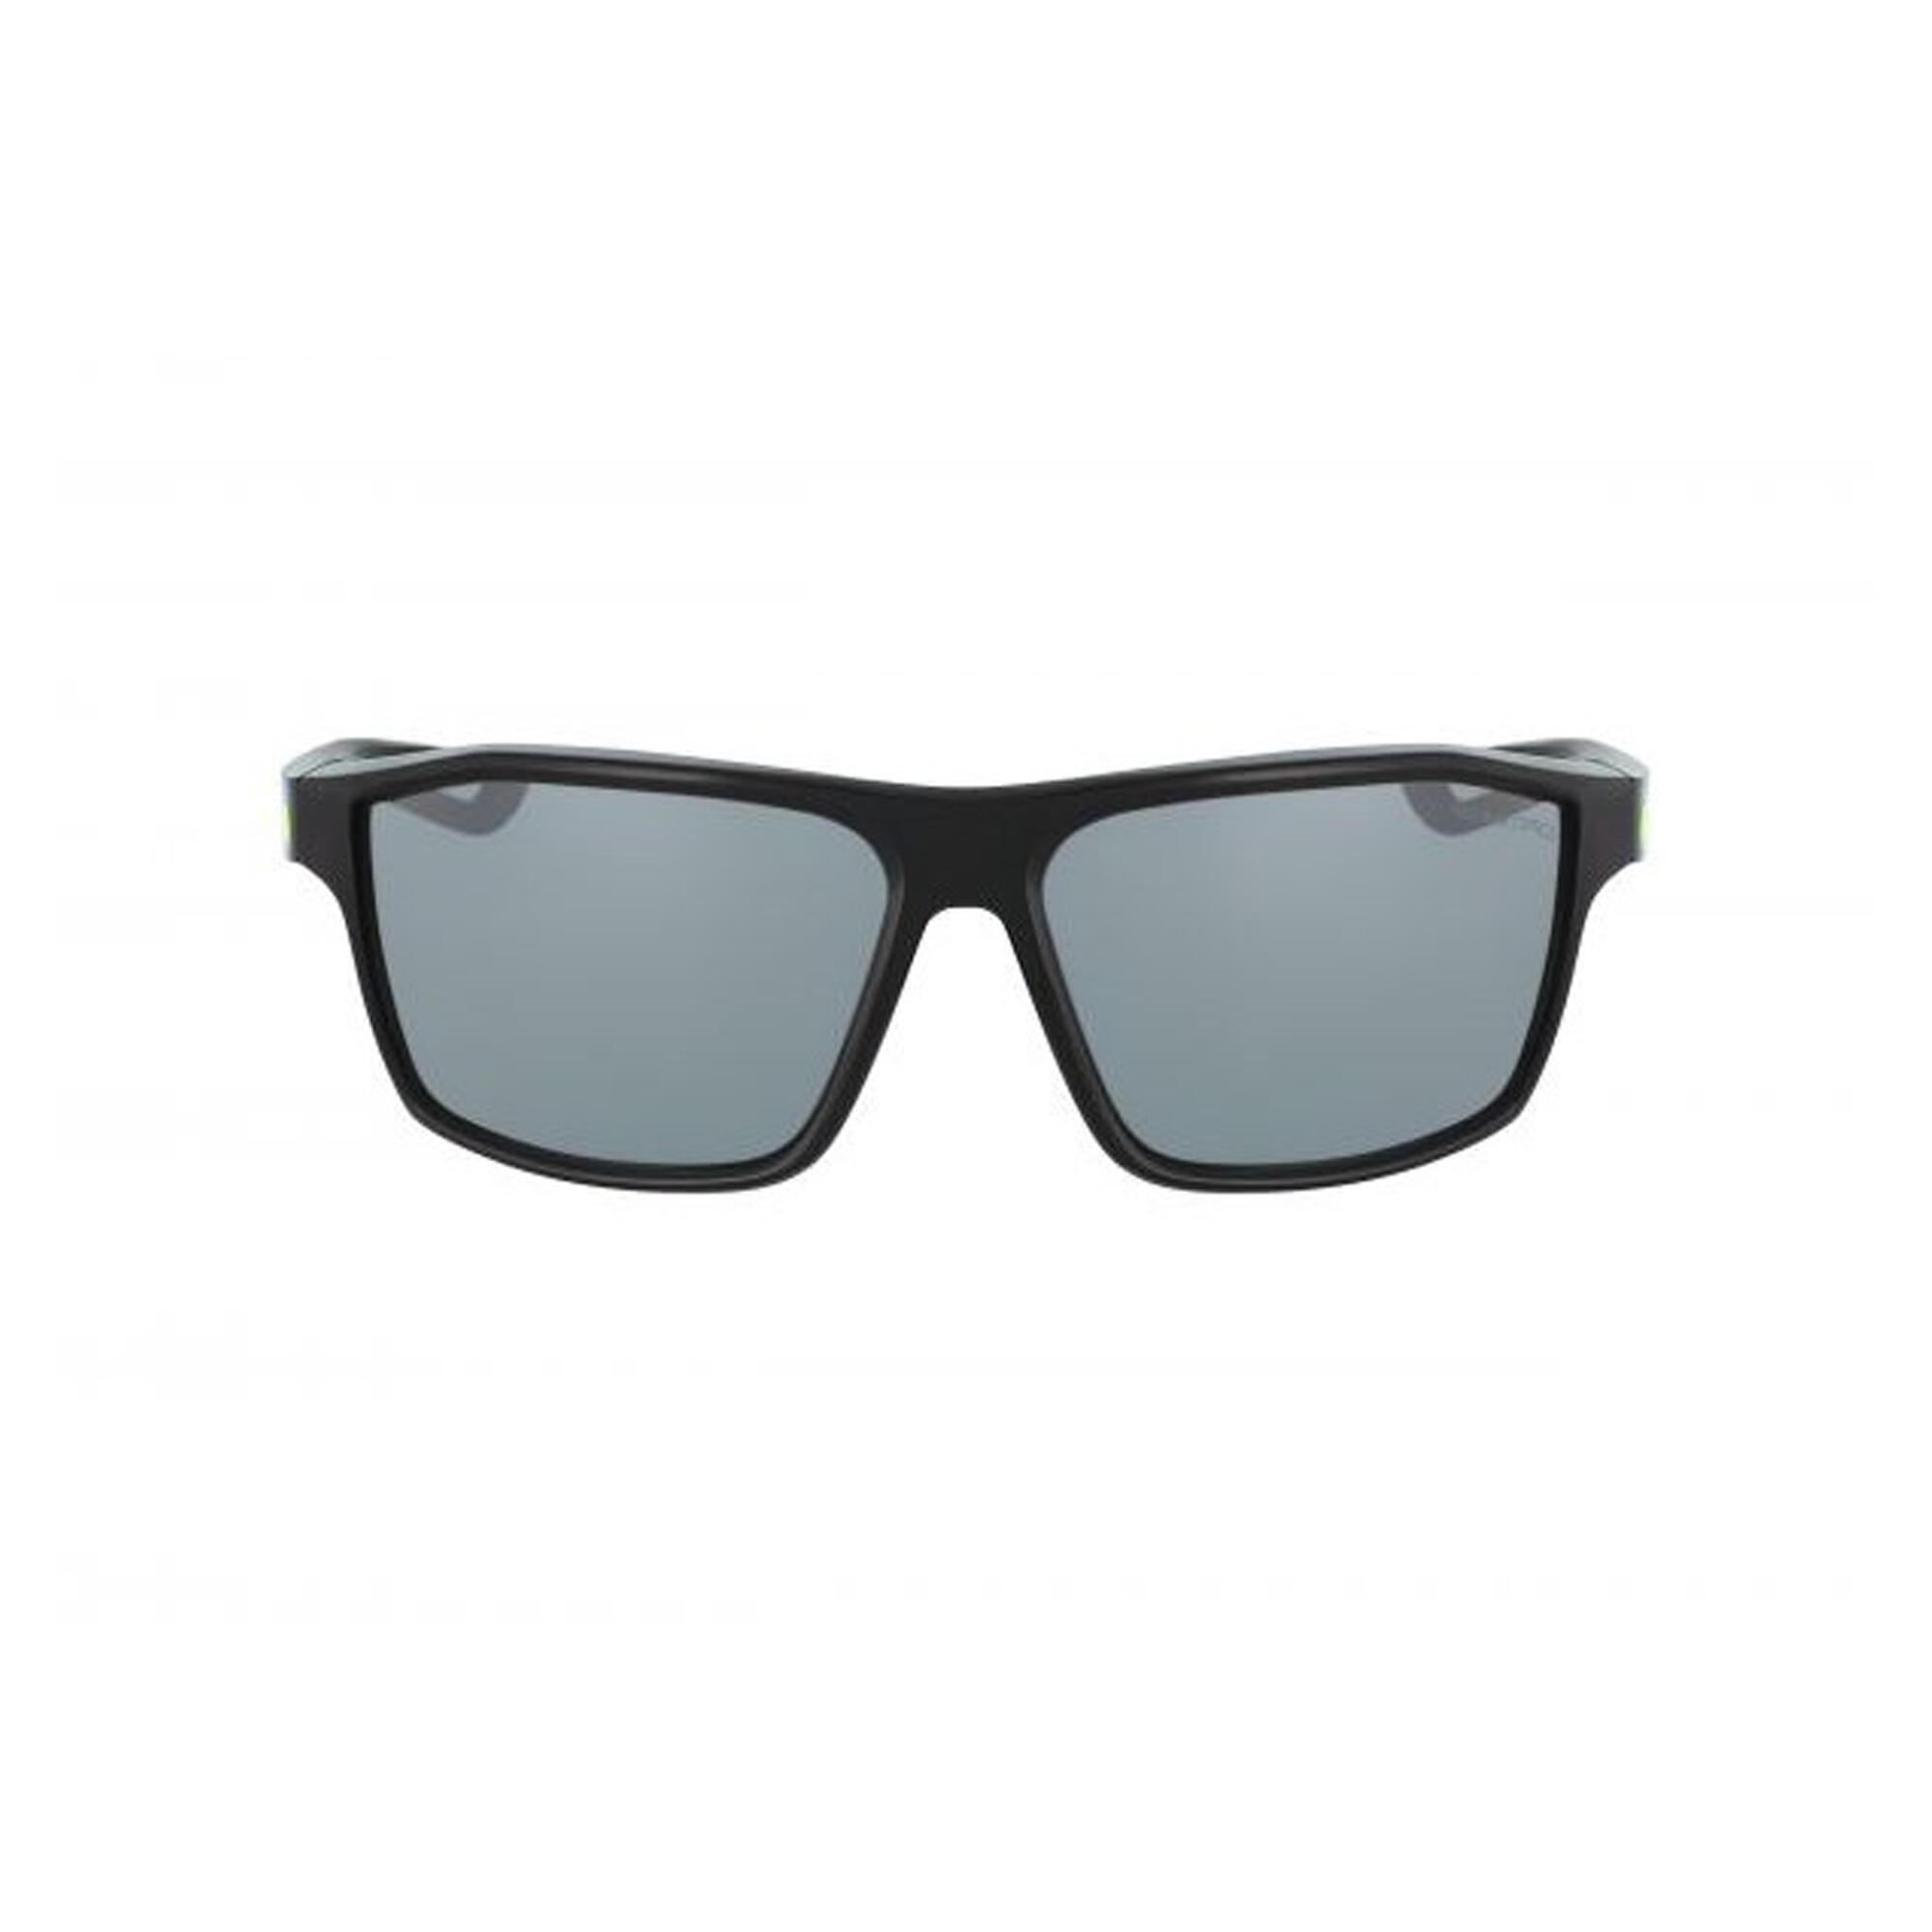 NIKE Unisex Adult Legend Flash Sunglasses (Black/Grey/Silver)